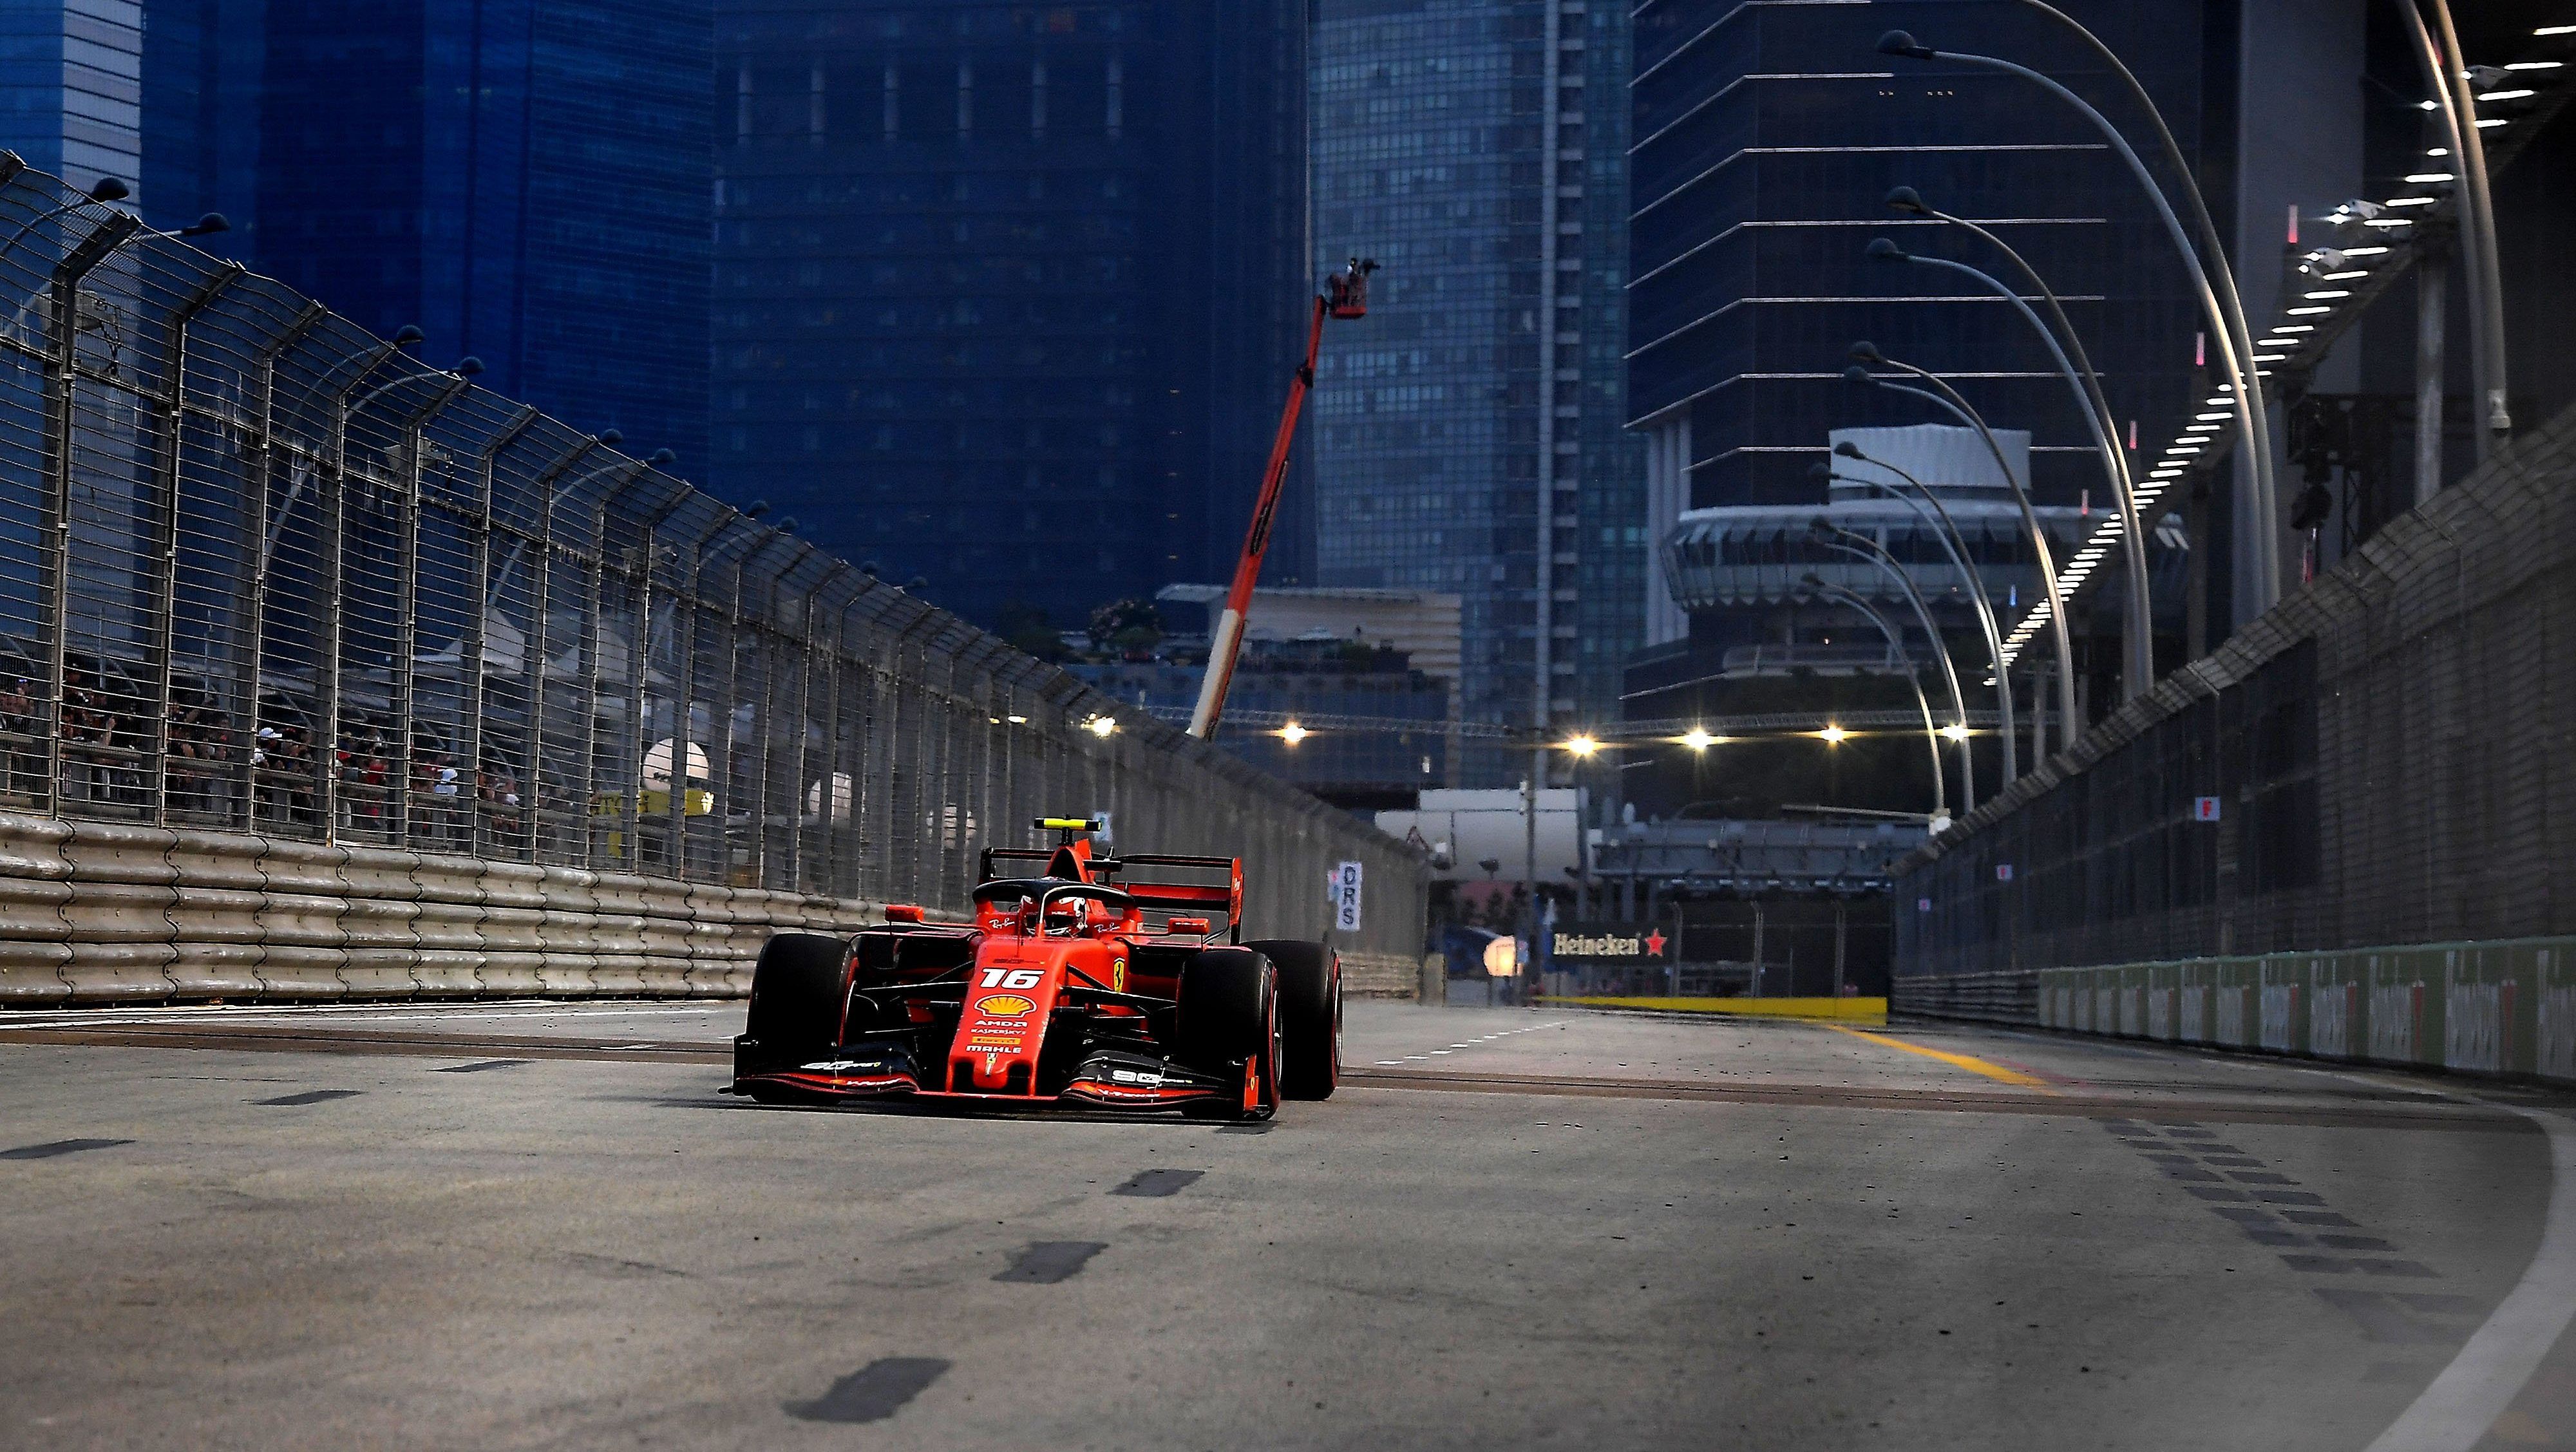 Singapore GP: Leclerc makes it three F1 poles in a row beating Hamilton